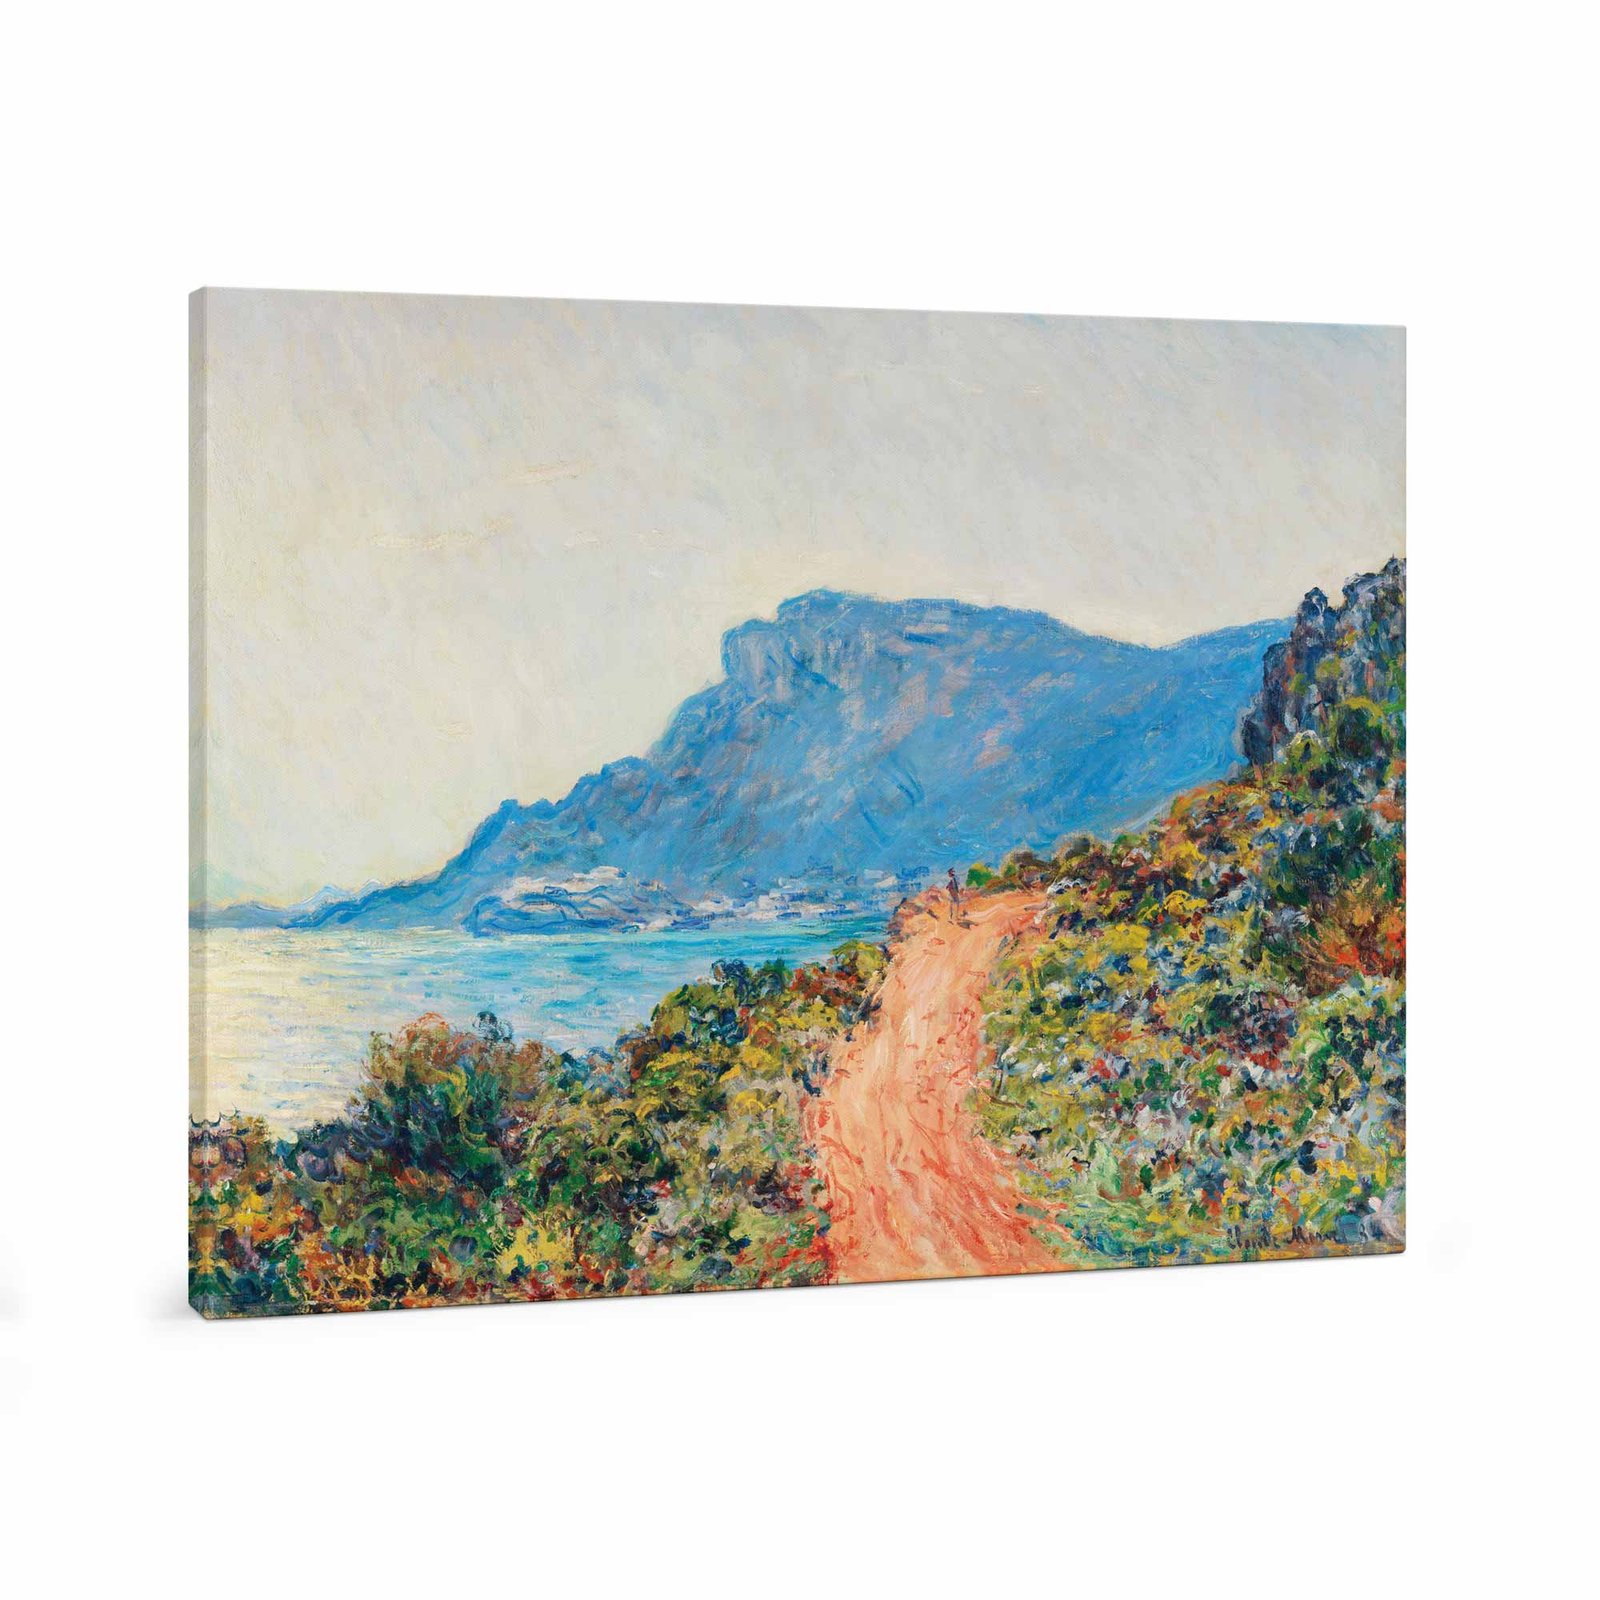 154 paveikslo reprodukcija ant drobes - La Corniche šalia Monako - Klodas Monė